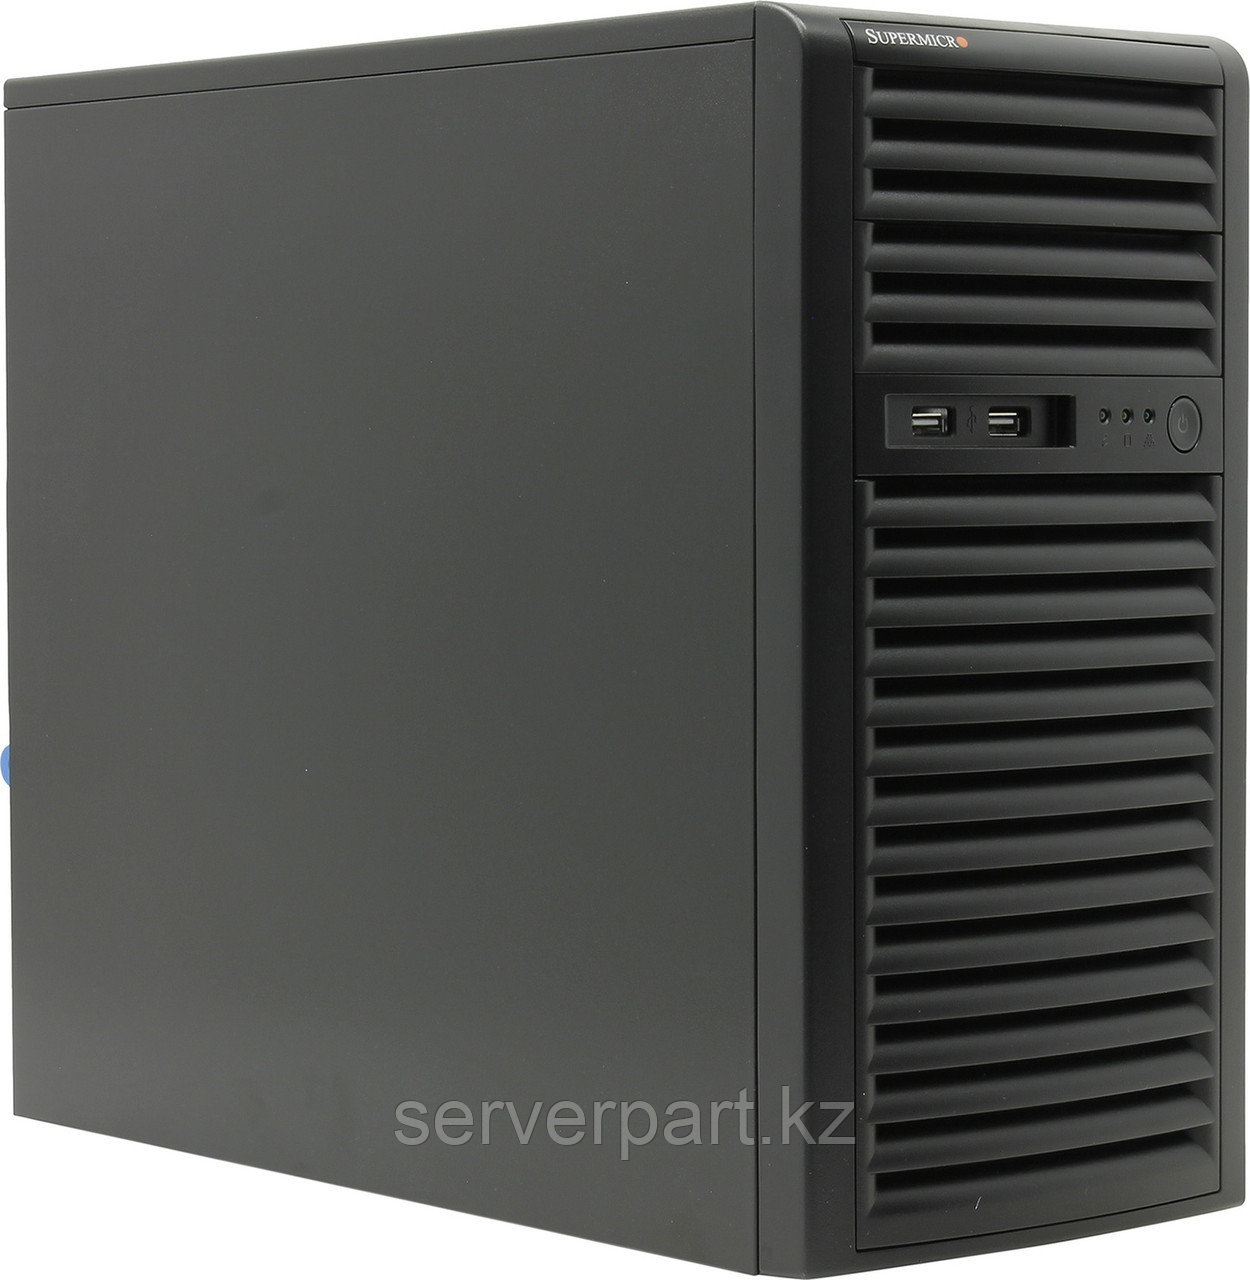 Сервер Supermicro SYS-5039C (Tower 4LFF)/4-core intel xeon E2224 (3.4GHz)/64GB UDIMM nECC